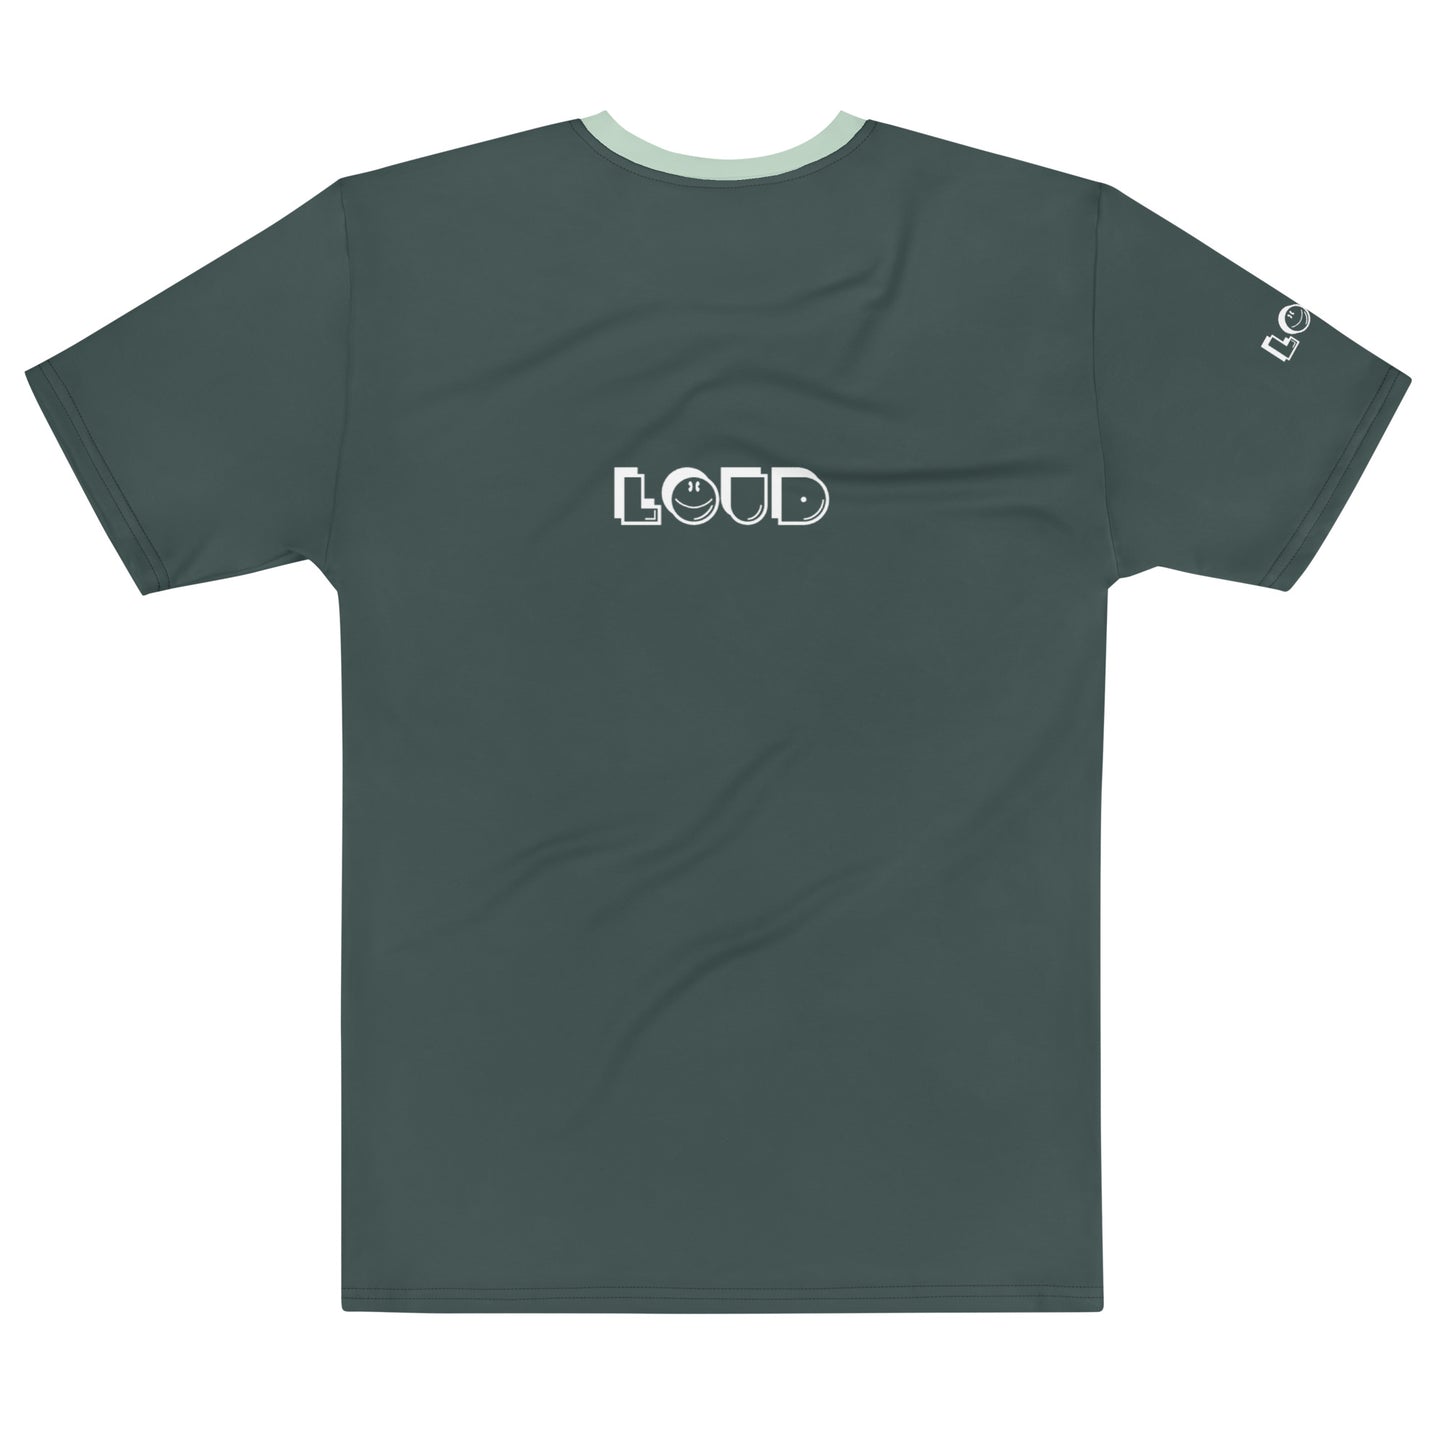 Loud Olive Green - Men's t-shirt